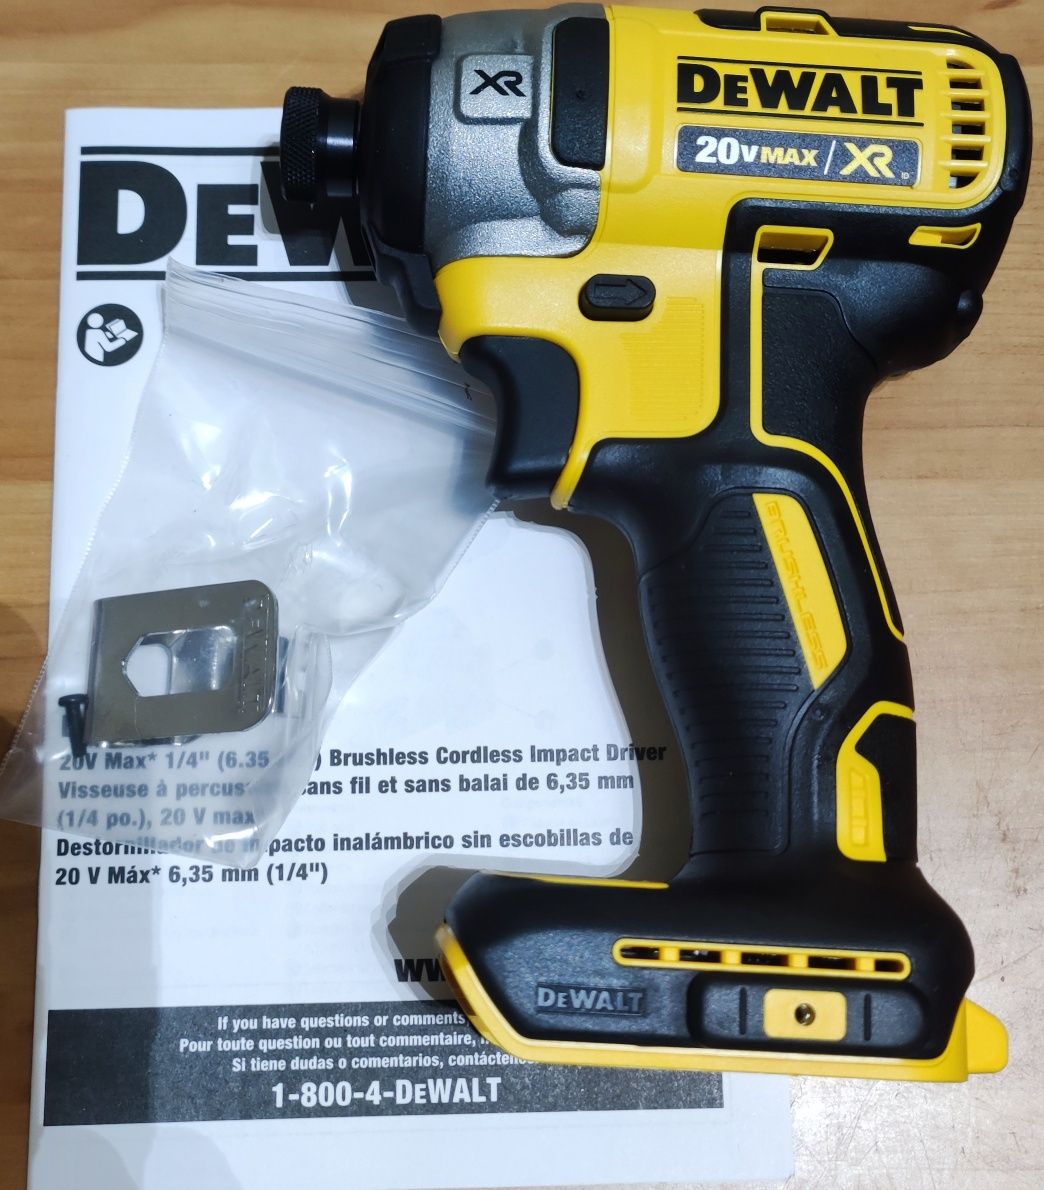 Dewalt Dcf887 Made in Mexico оригінал із штатів